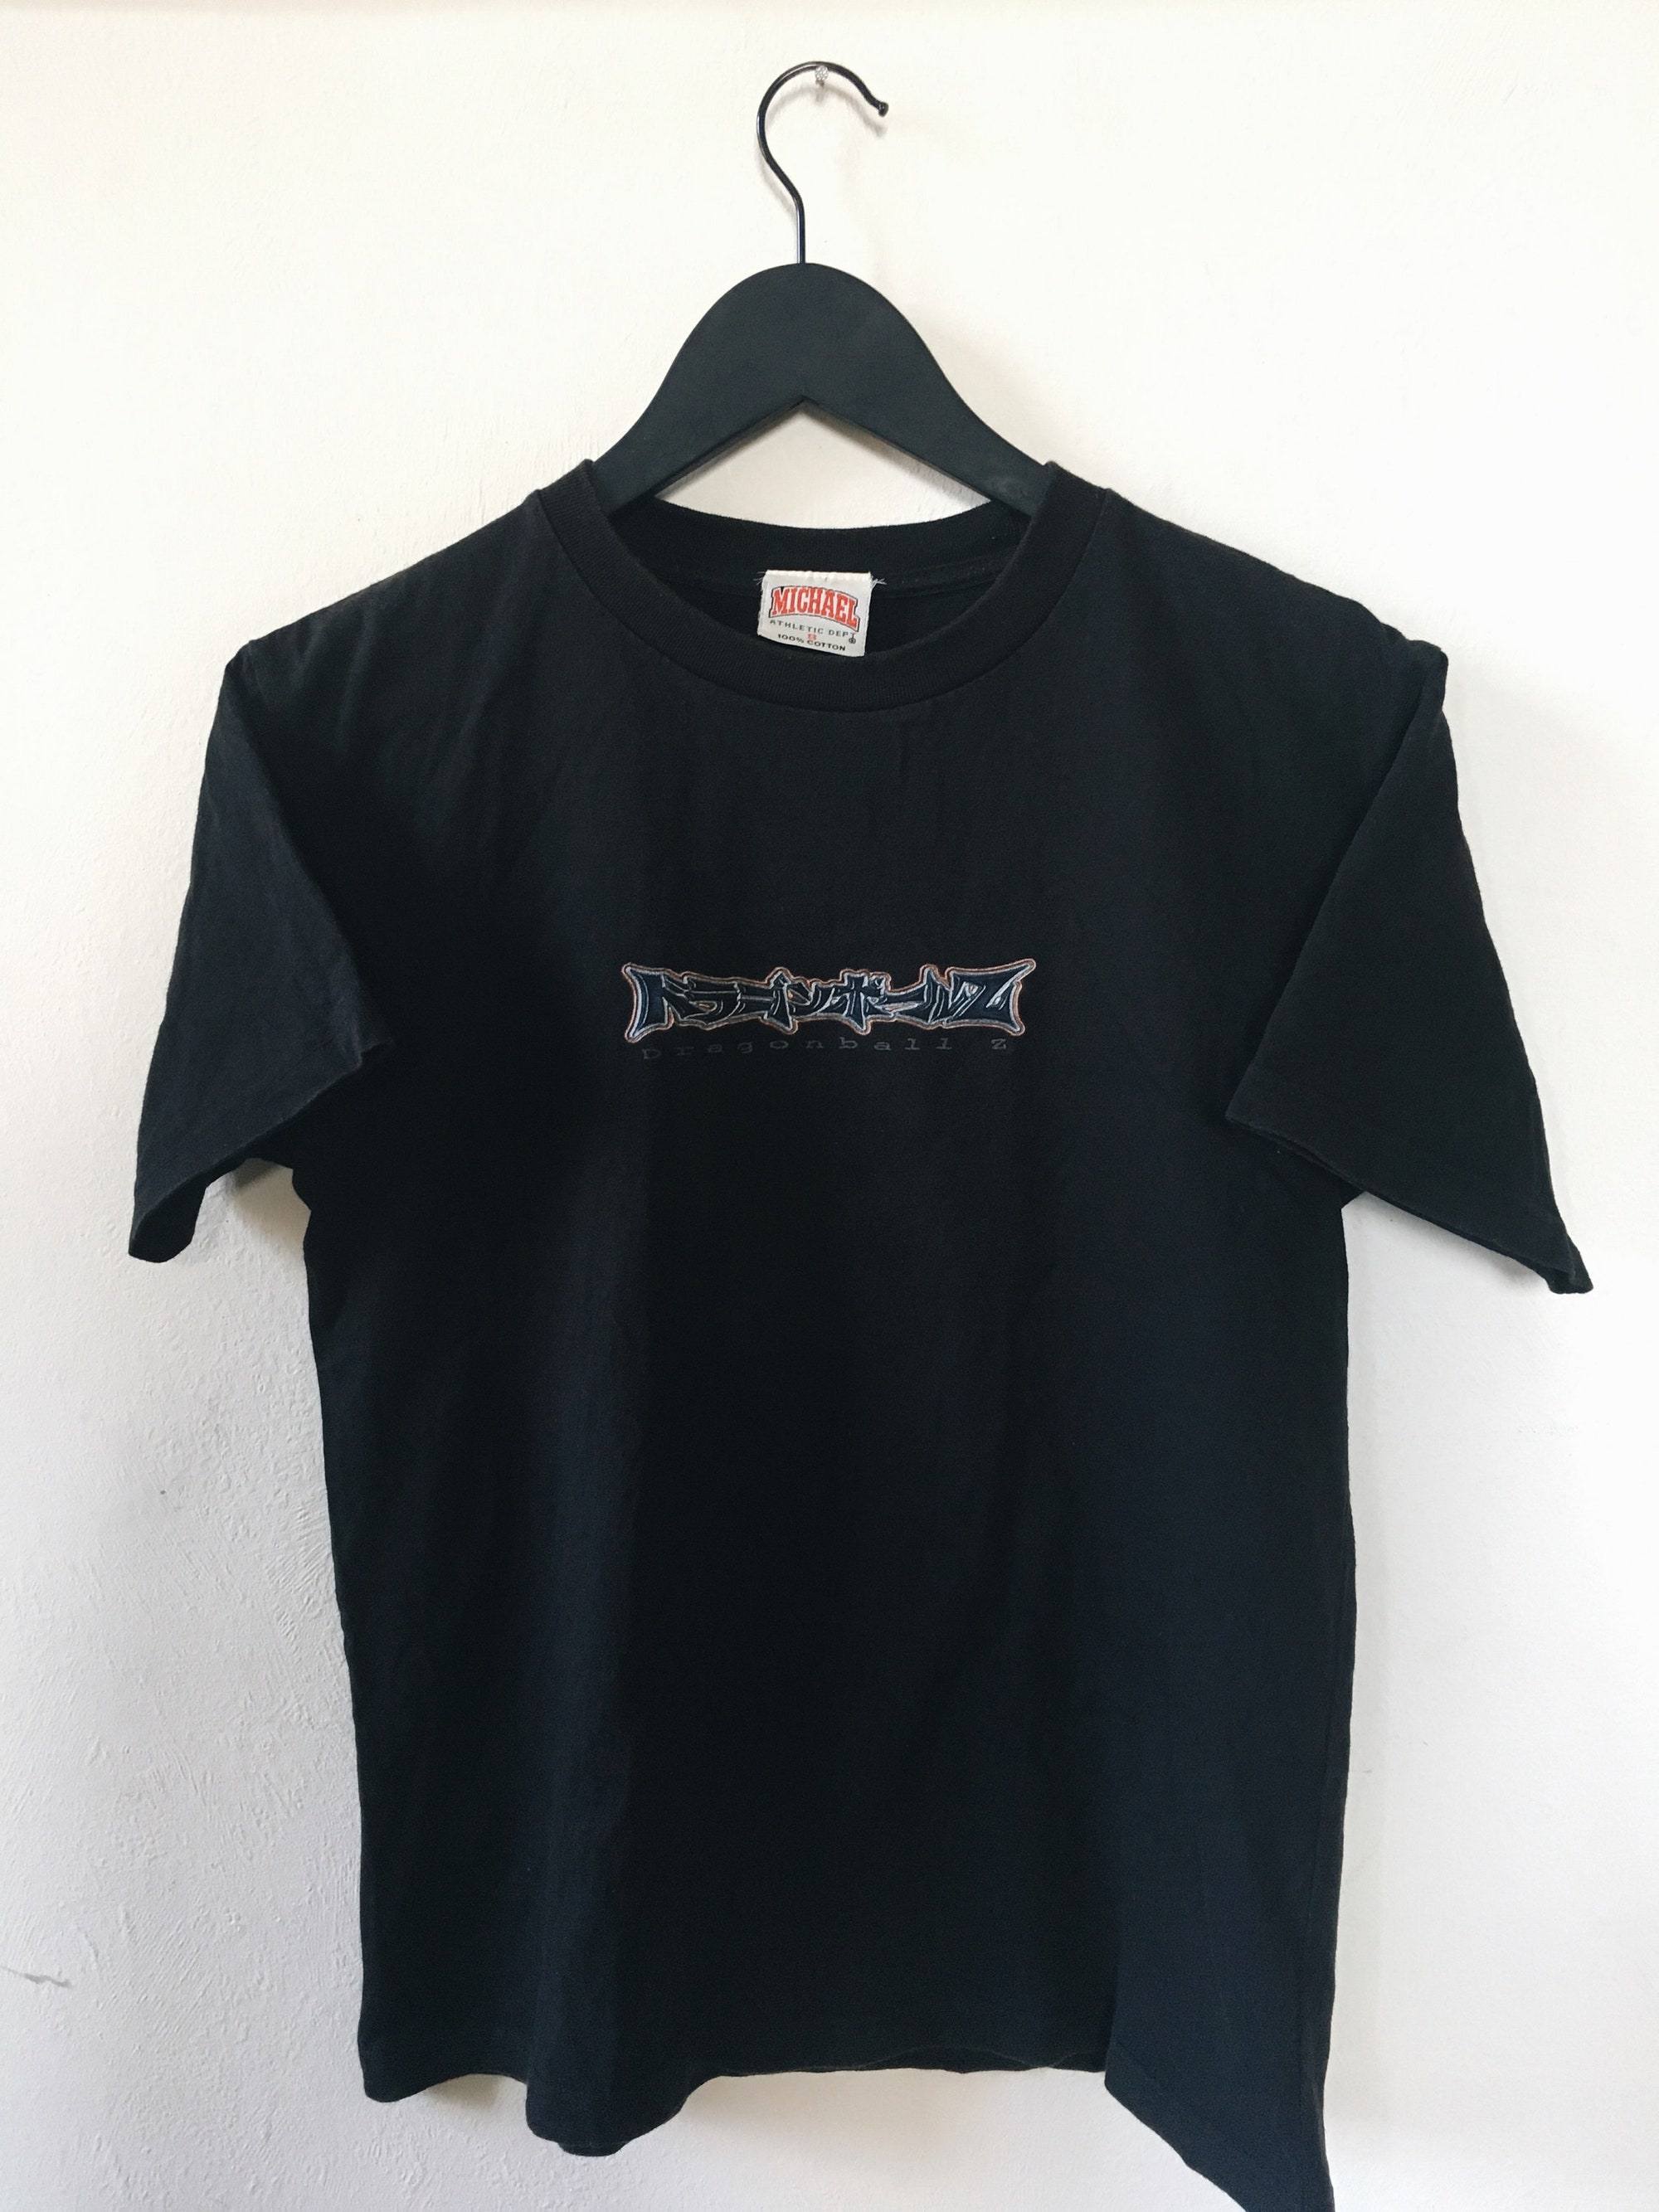 Vintage 2000 Dragon Ball Z Licensed T-shirt Black